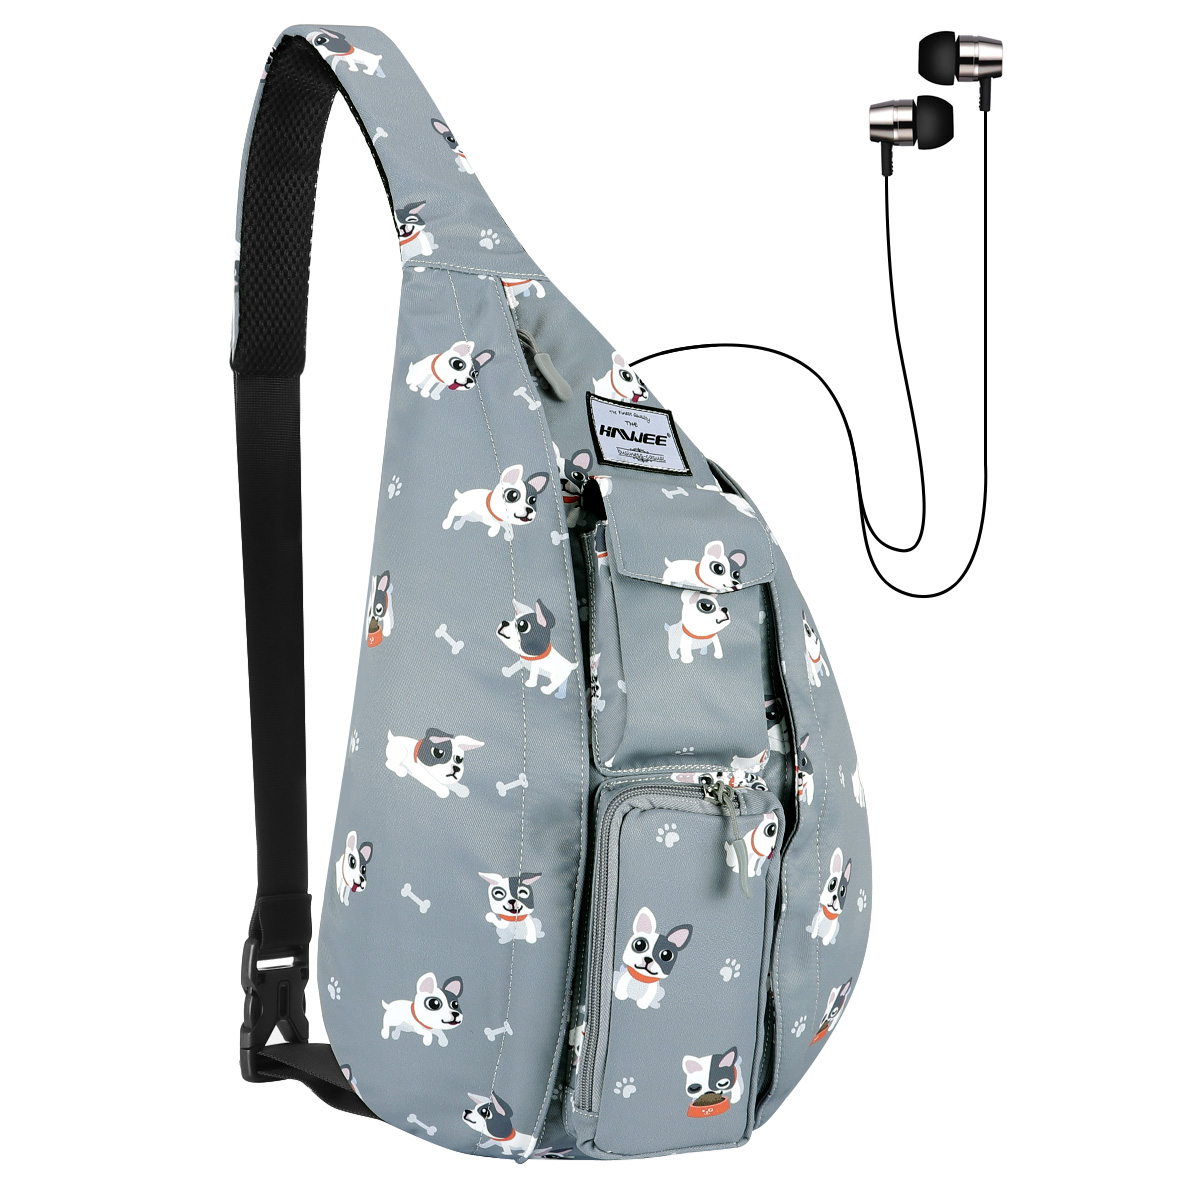 HAWEE Sling Backpack Hiking Backpack Chest Sling Bag Sports Travel Crossbody Daypack for Women, Grey + White Dog - image 1 of 7